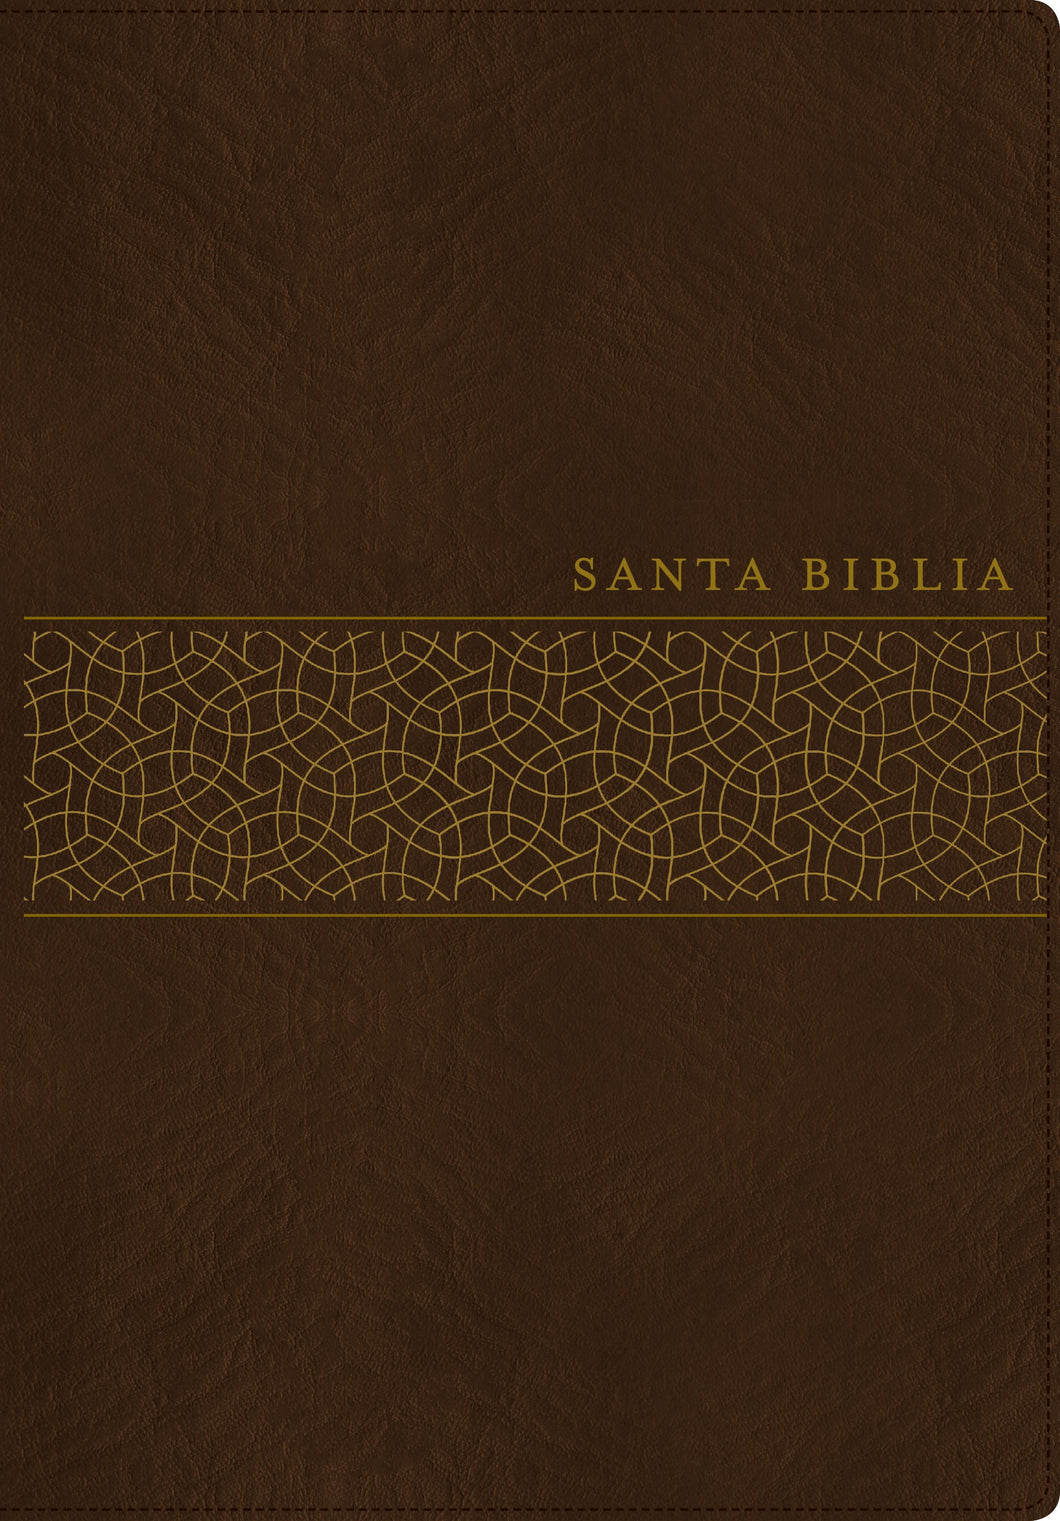 NTV Handy Size Bible/Large Print (Santa Biblia  Edicion Manual  Letra Gigante)-Brown LeatherLike